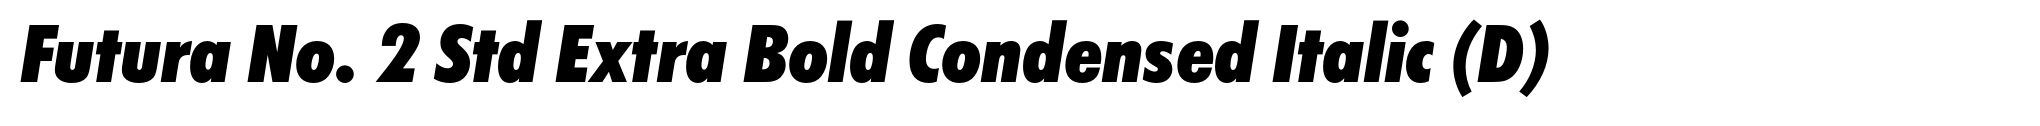 Futura No. 2 Std Extra Bold Condensed Italic (D) image